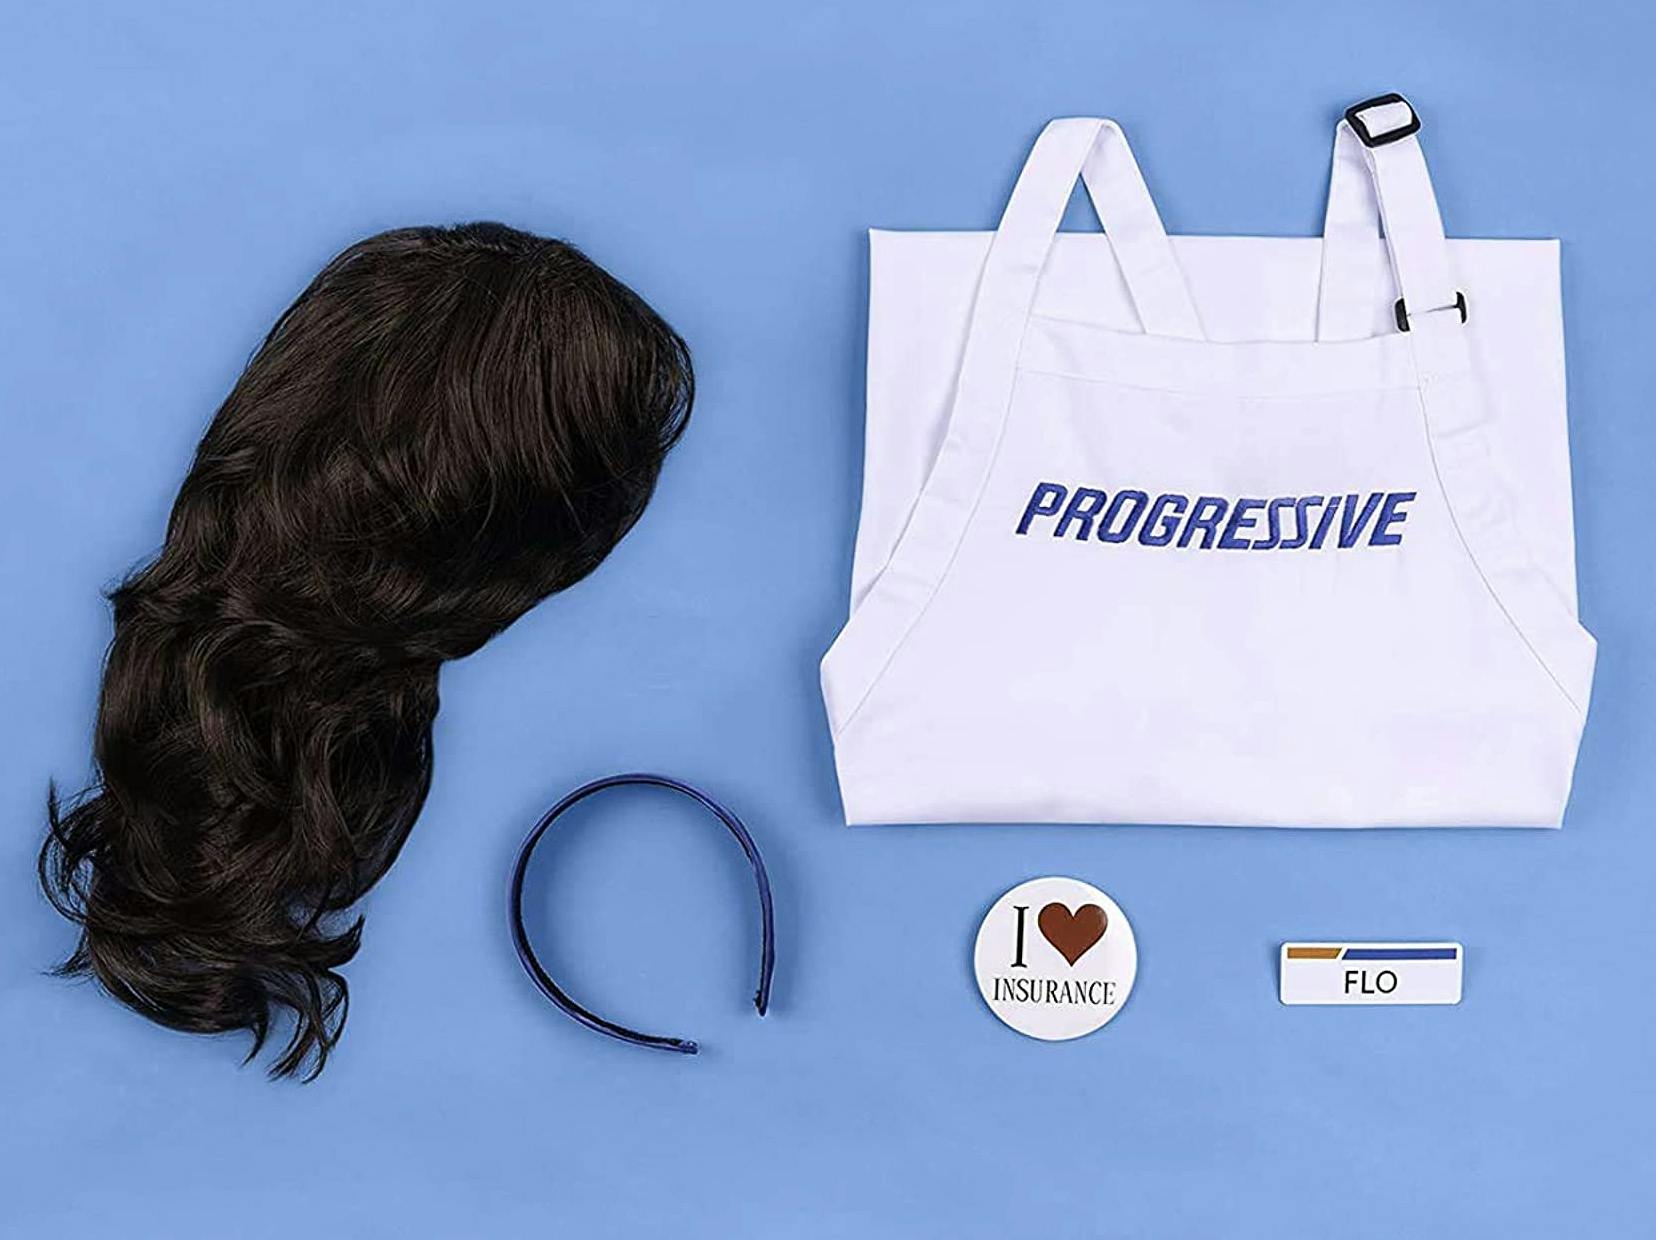 Progressive insurance Flo costume pieces on a blue background.